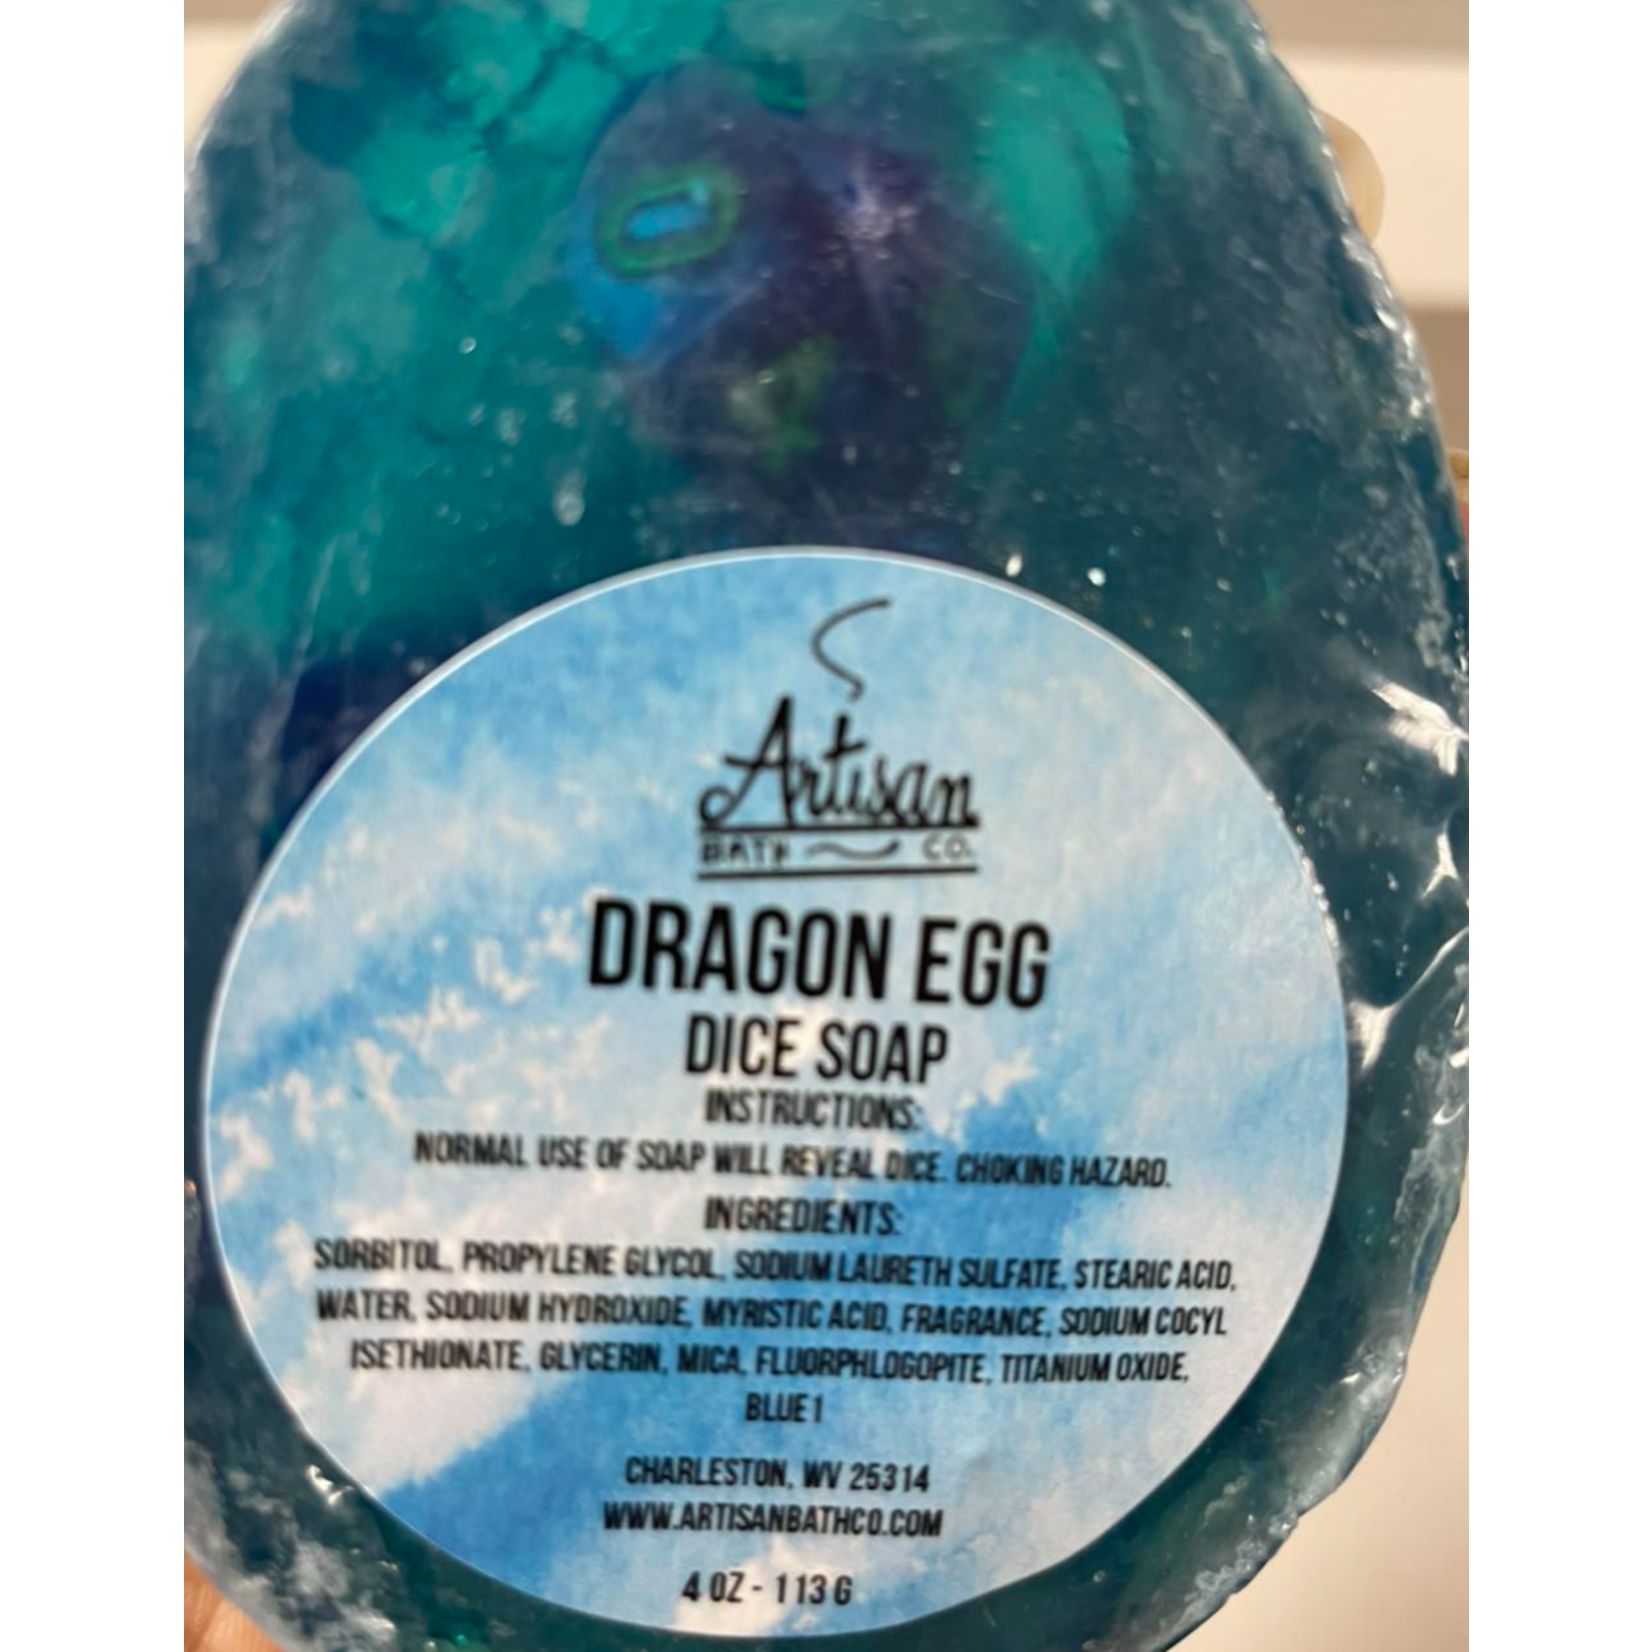 Artisan Bath Co. Dice Soap: Dragon Egg (Blue with 7-Piece Dice Set Inside)